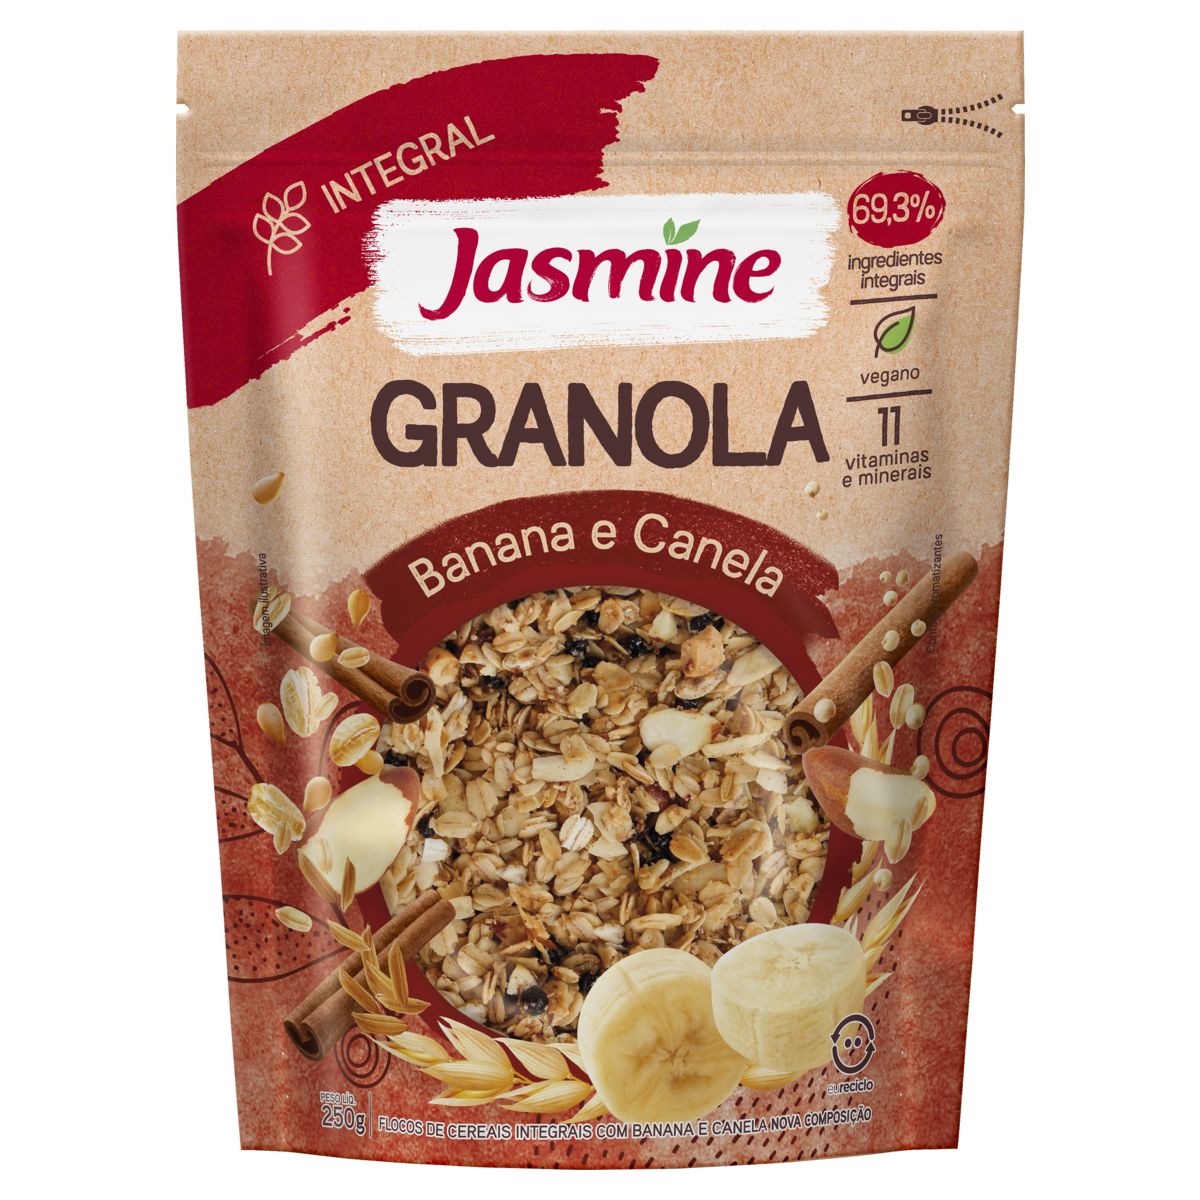 Granola Jasmine Banana e Canela 69,3% Integral Pouch 250g image number 0